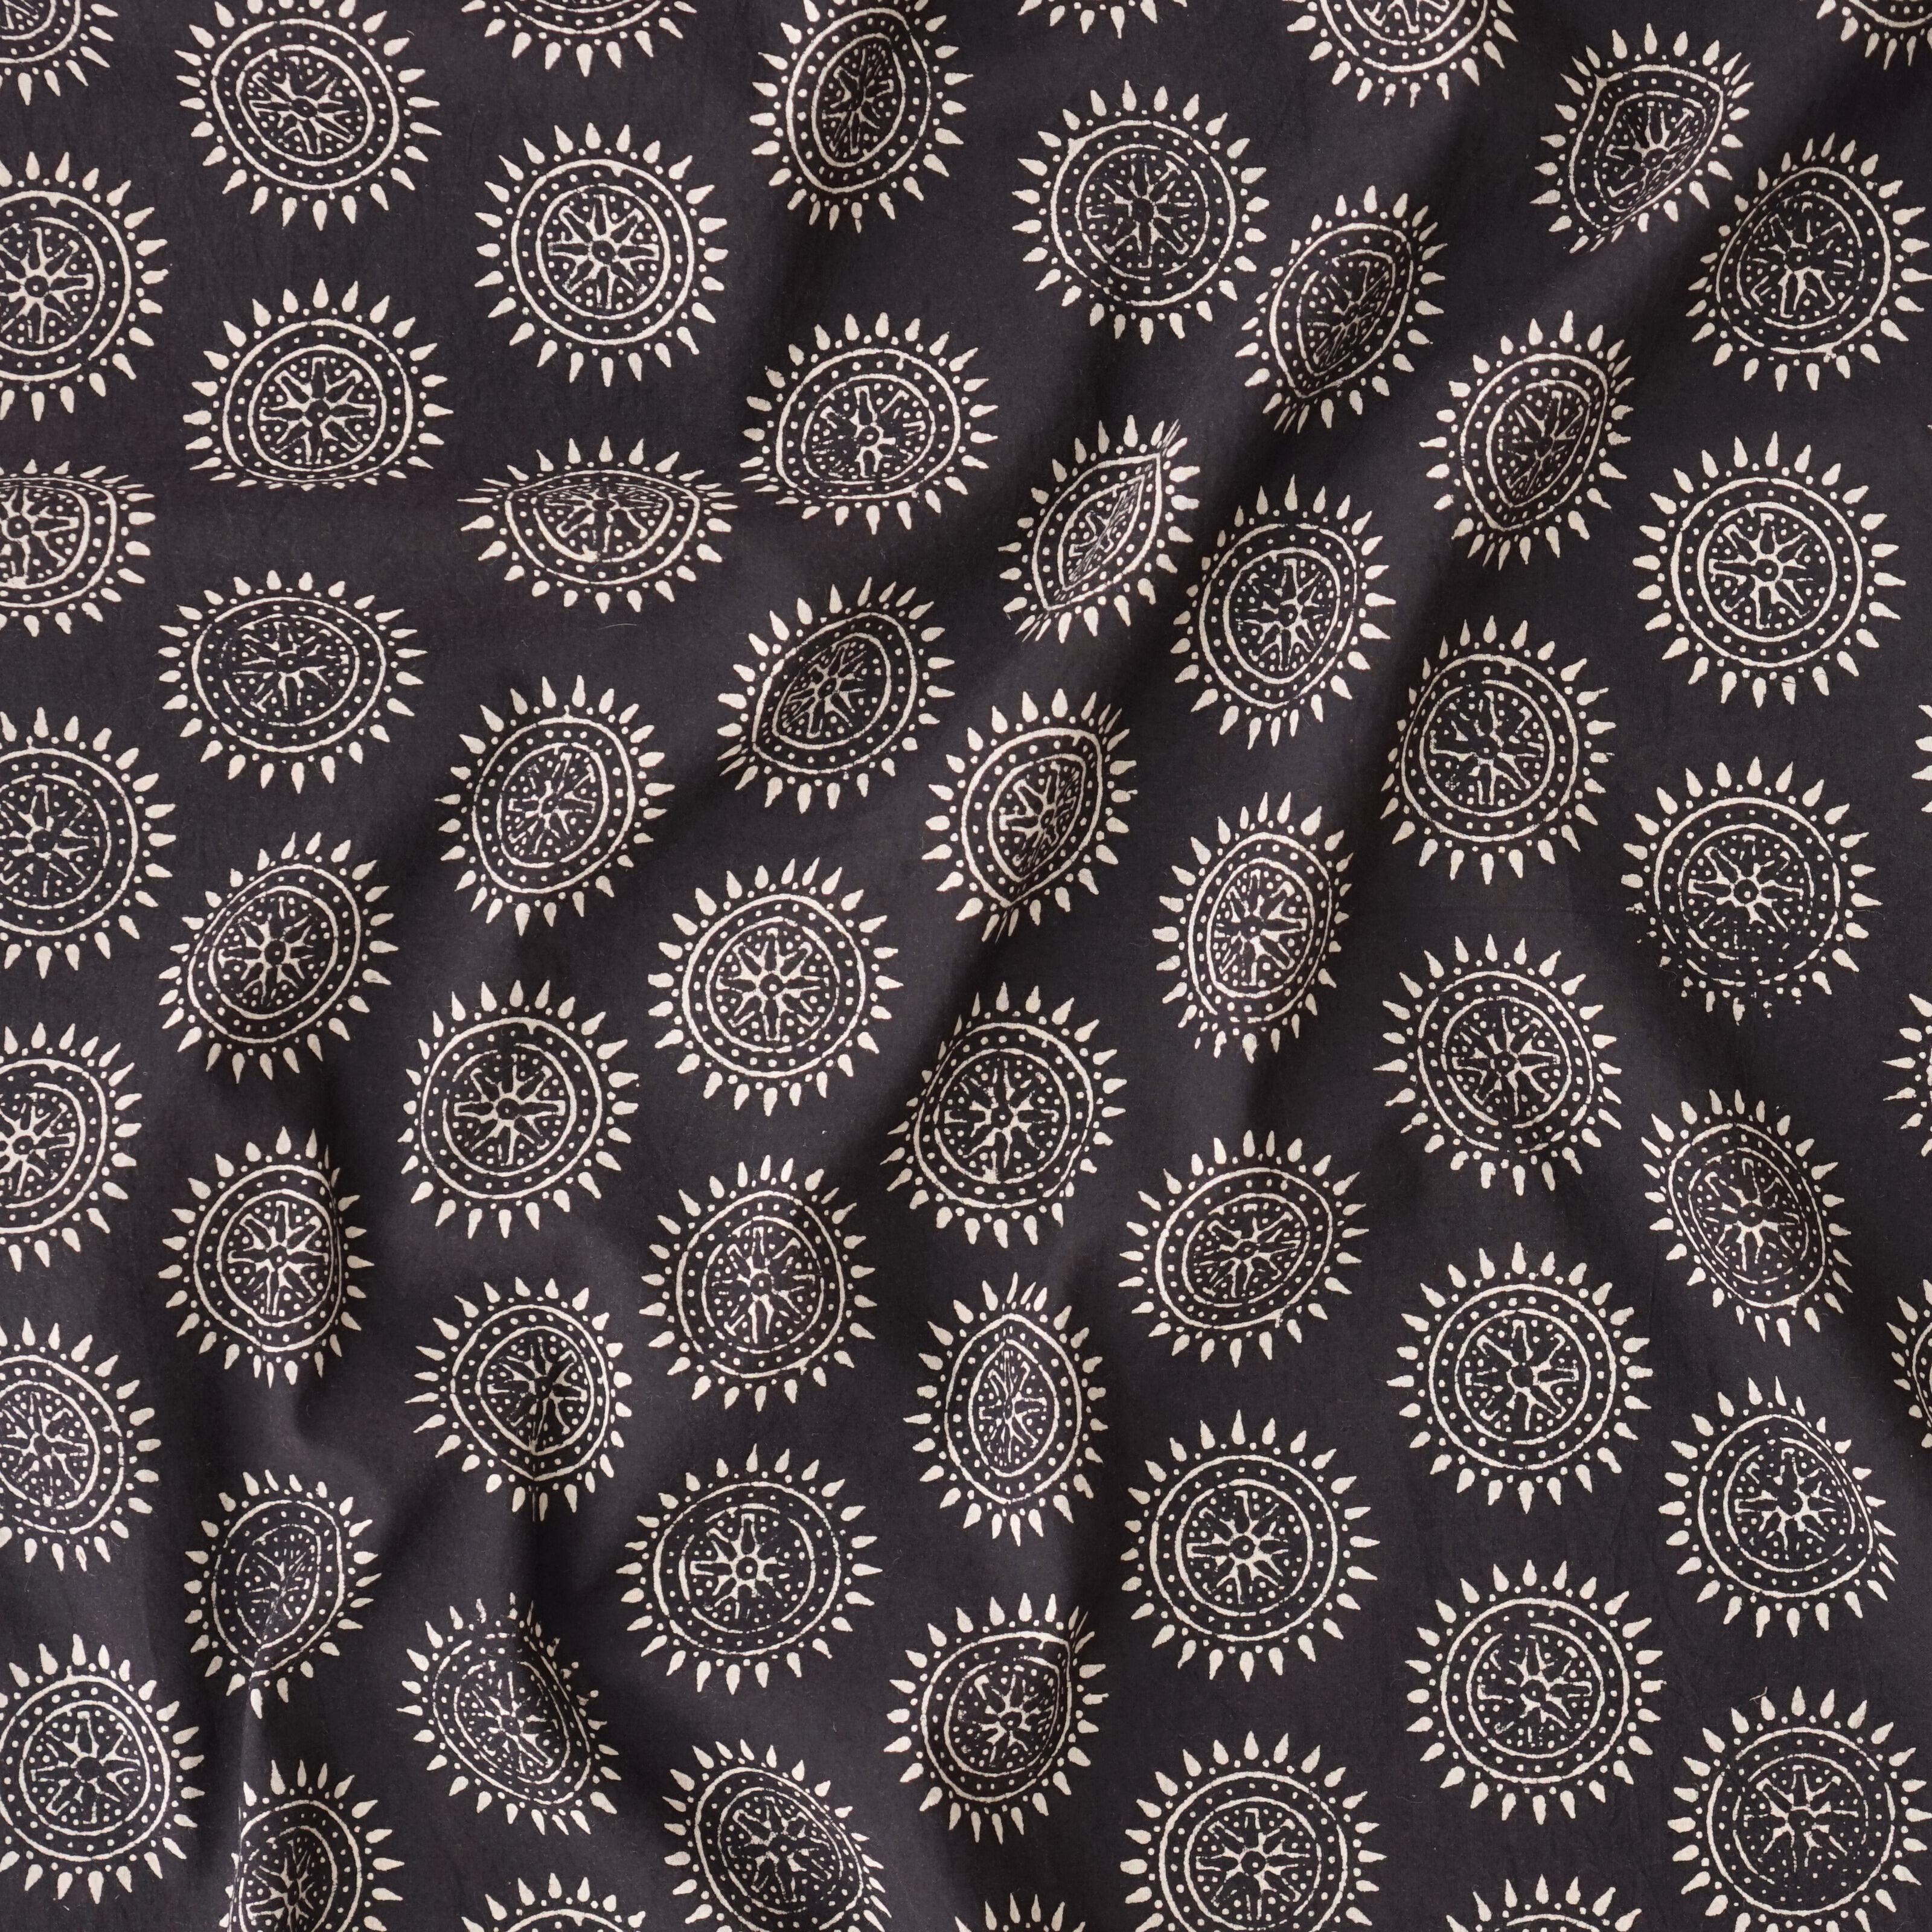 1 - AHM59 - Block-Printed Cotton - Black Dye- Drifter Print - Contrast